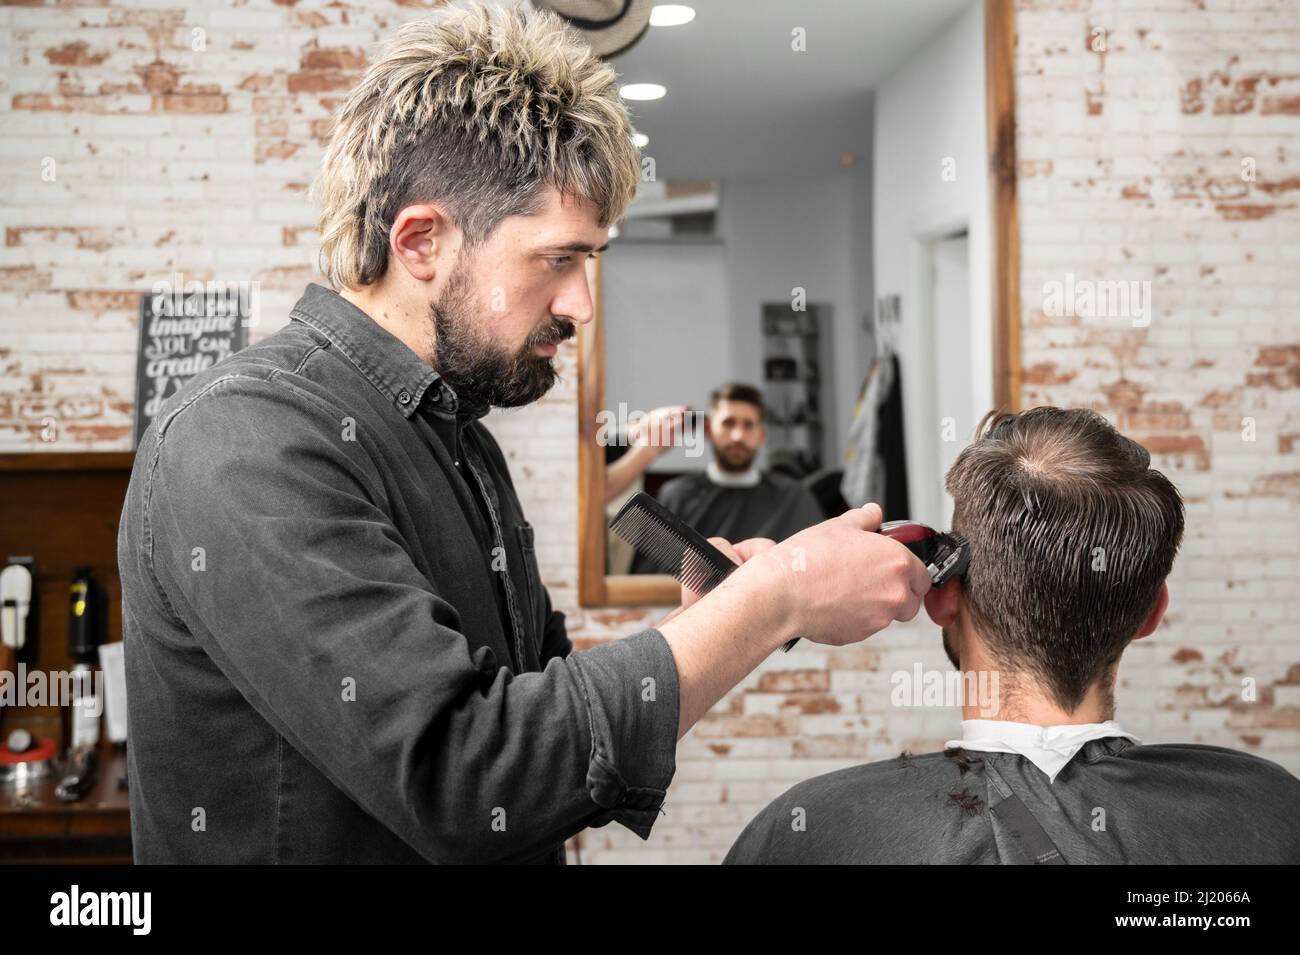 Hombre barbero cortando pelo de cliente masculino con cortapelos